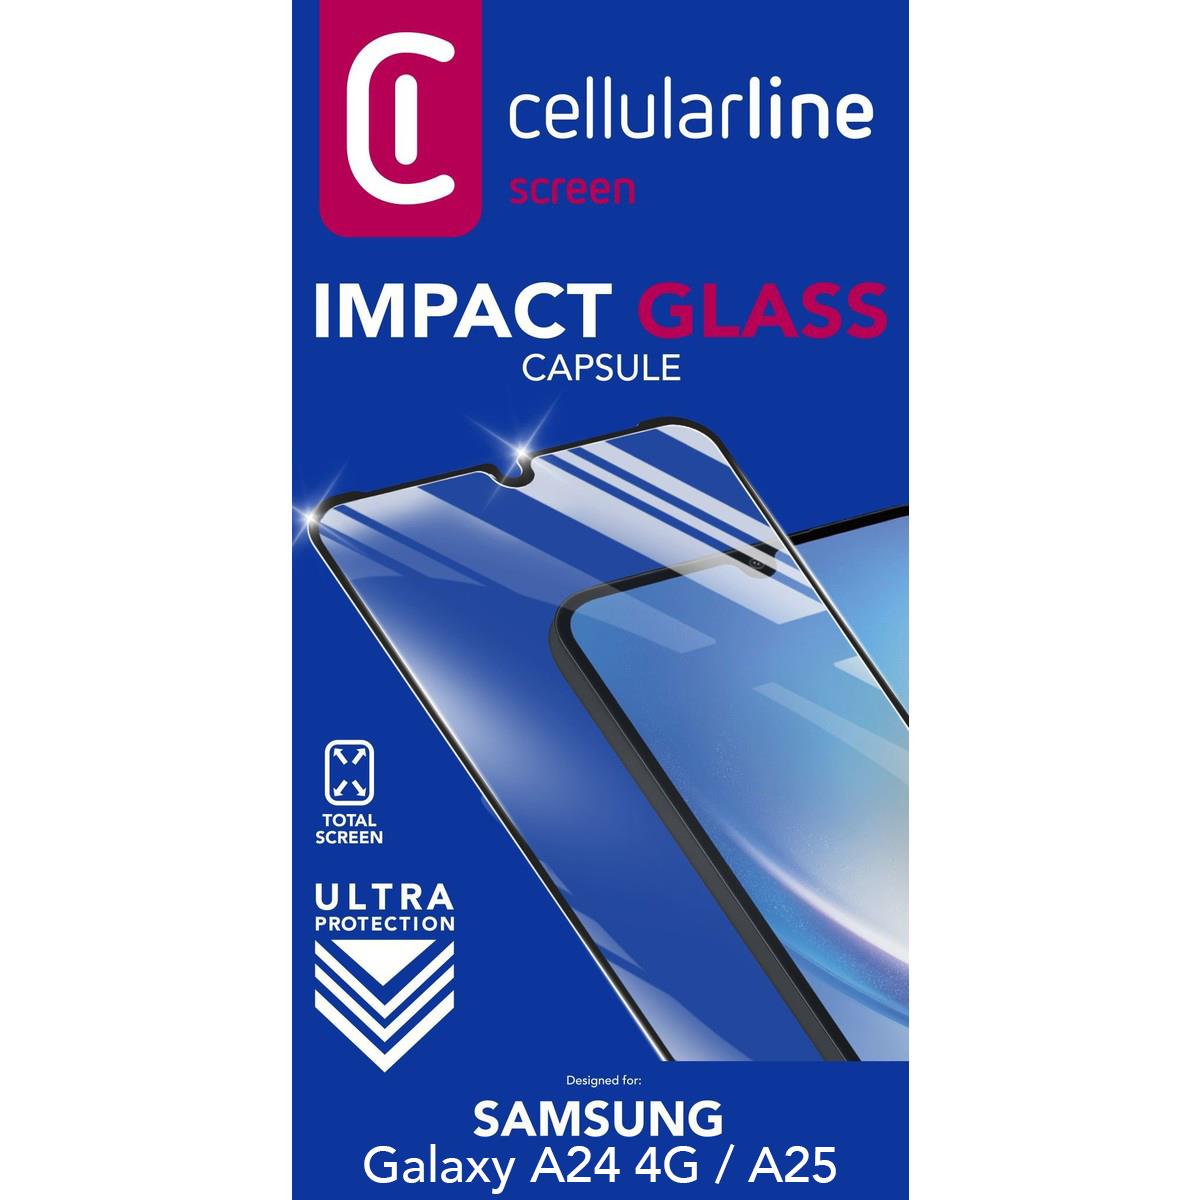 Schutzglas IMPACT GLASS CAPSULE für Samsung Galaxy A24 / A25